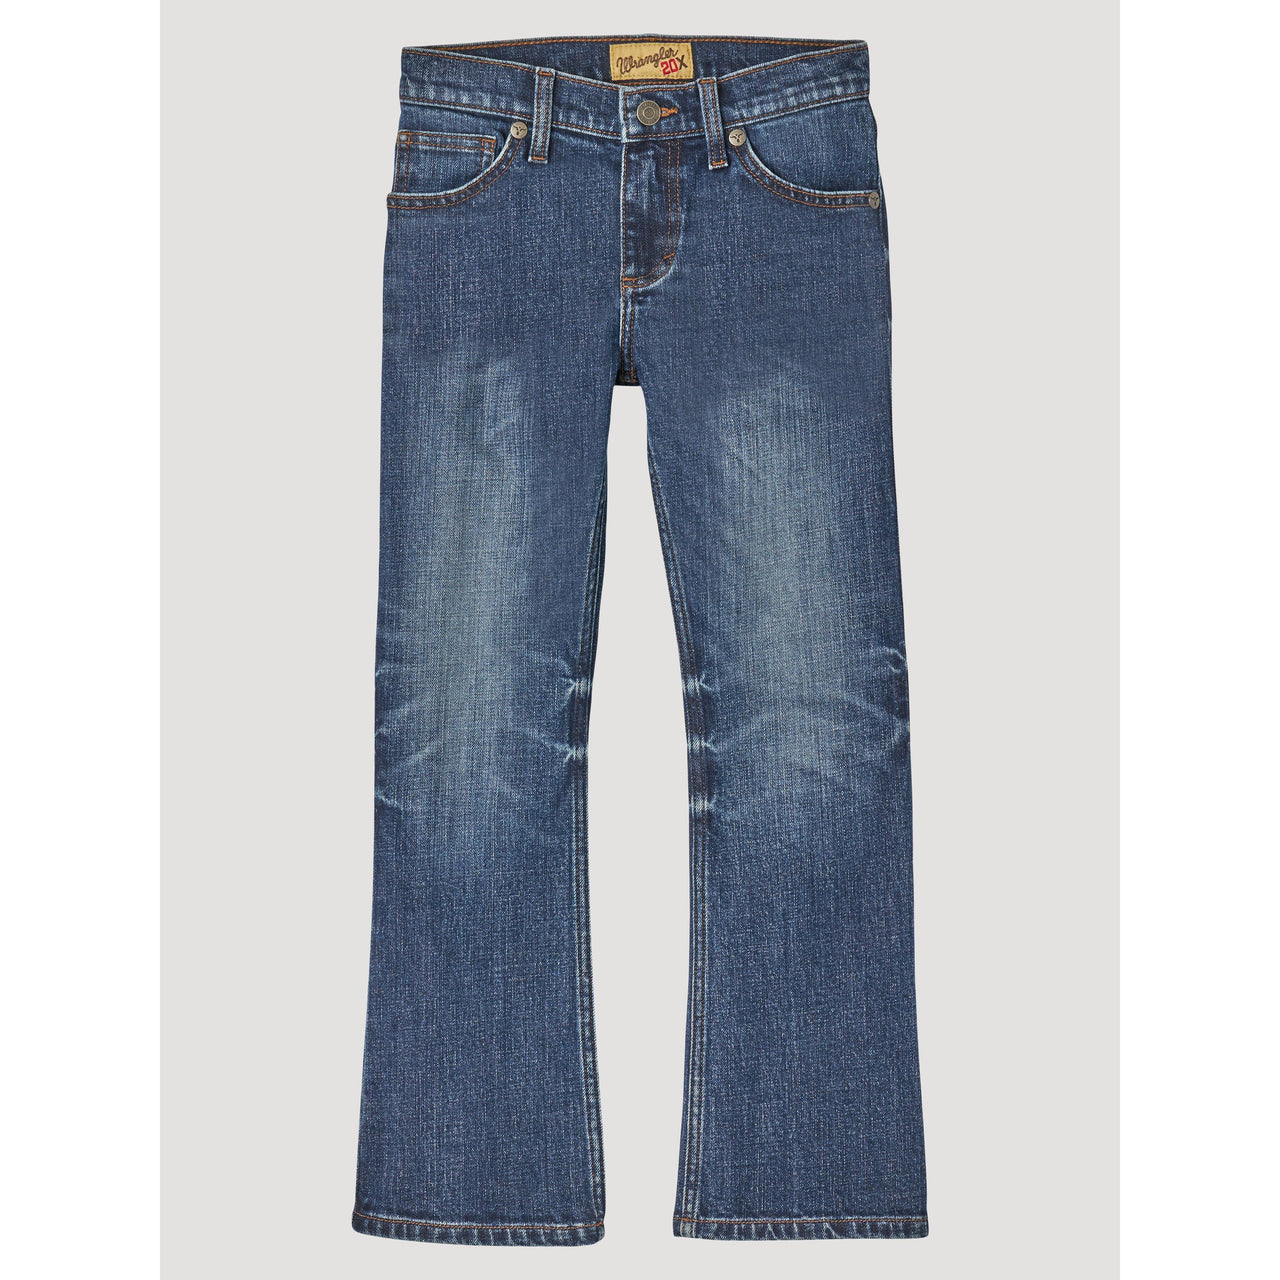 Wrangler Boy's Youth 20X No.42 Vintage Bootcut Jeans - Barksdale